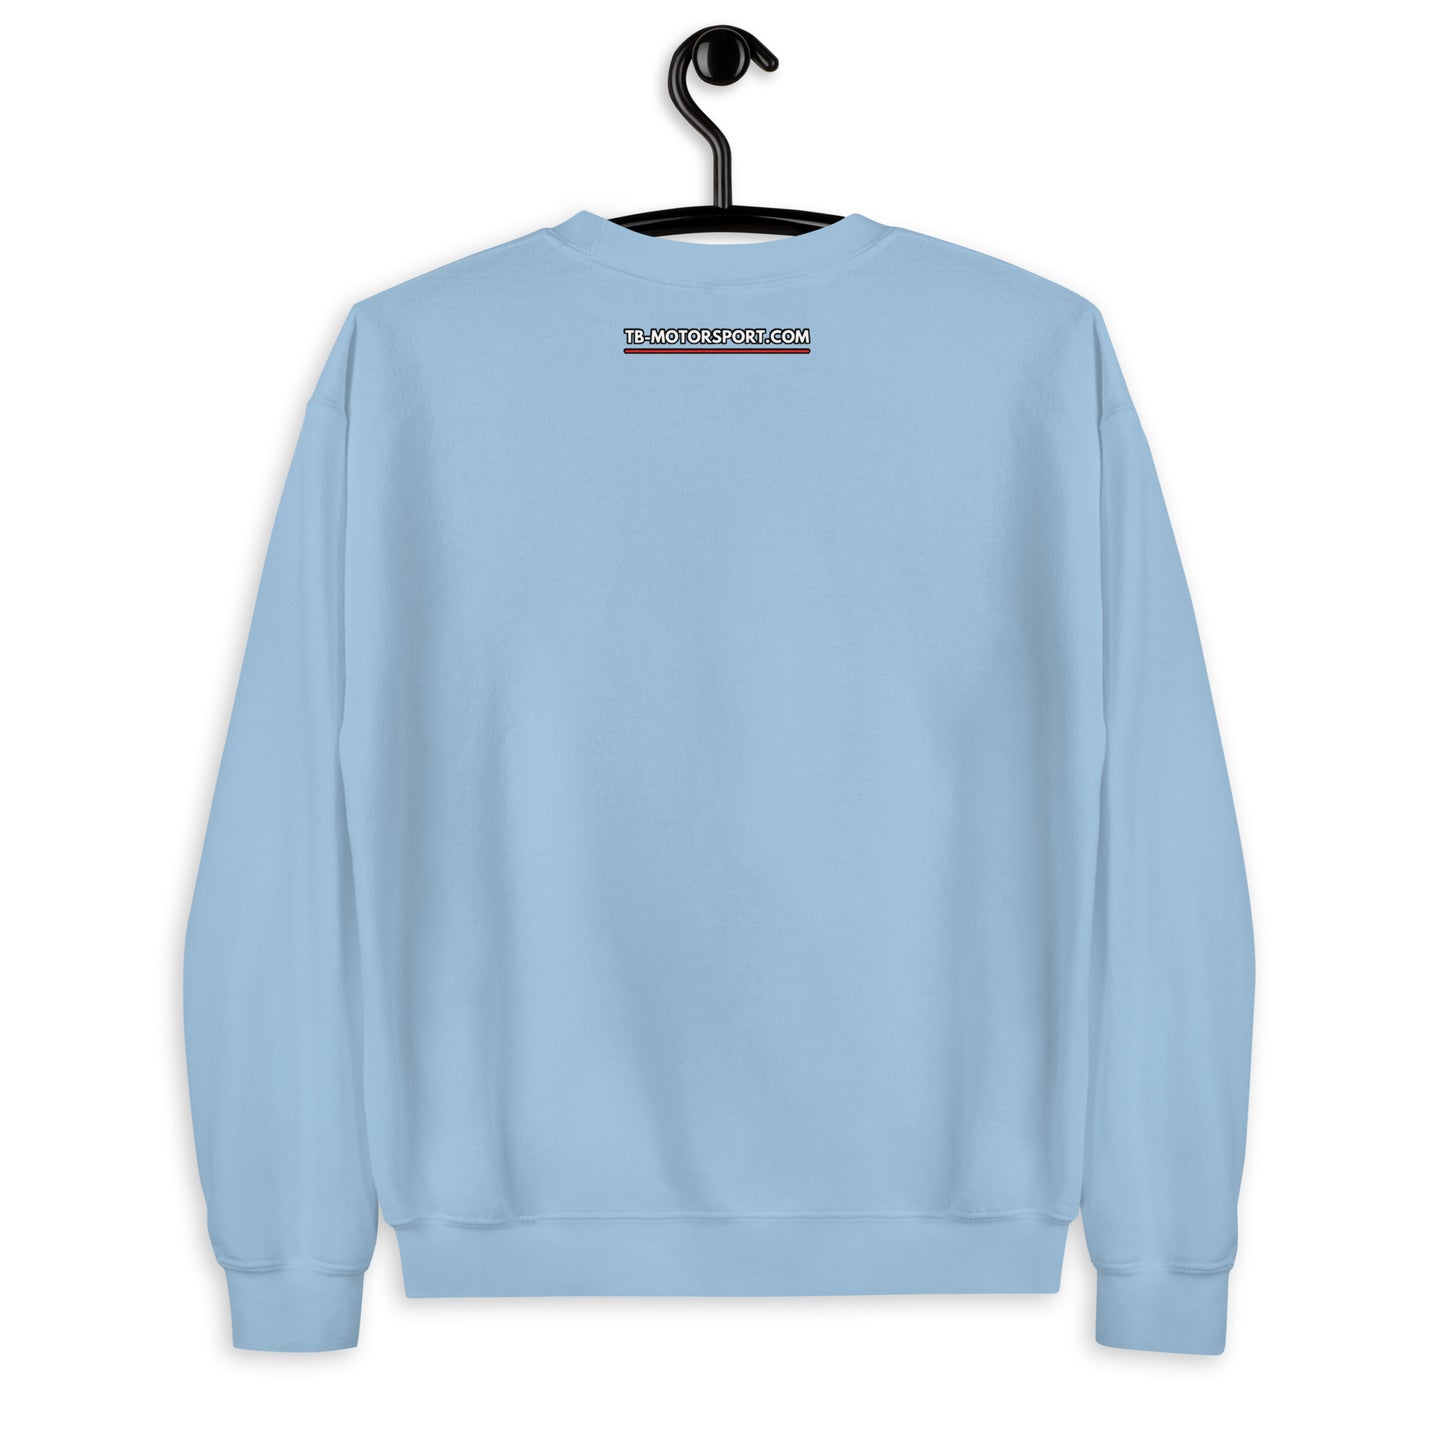 E24 TBM XMAS Sweater